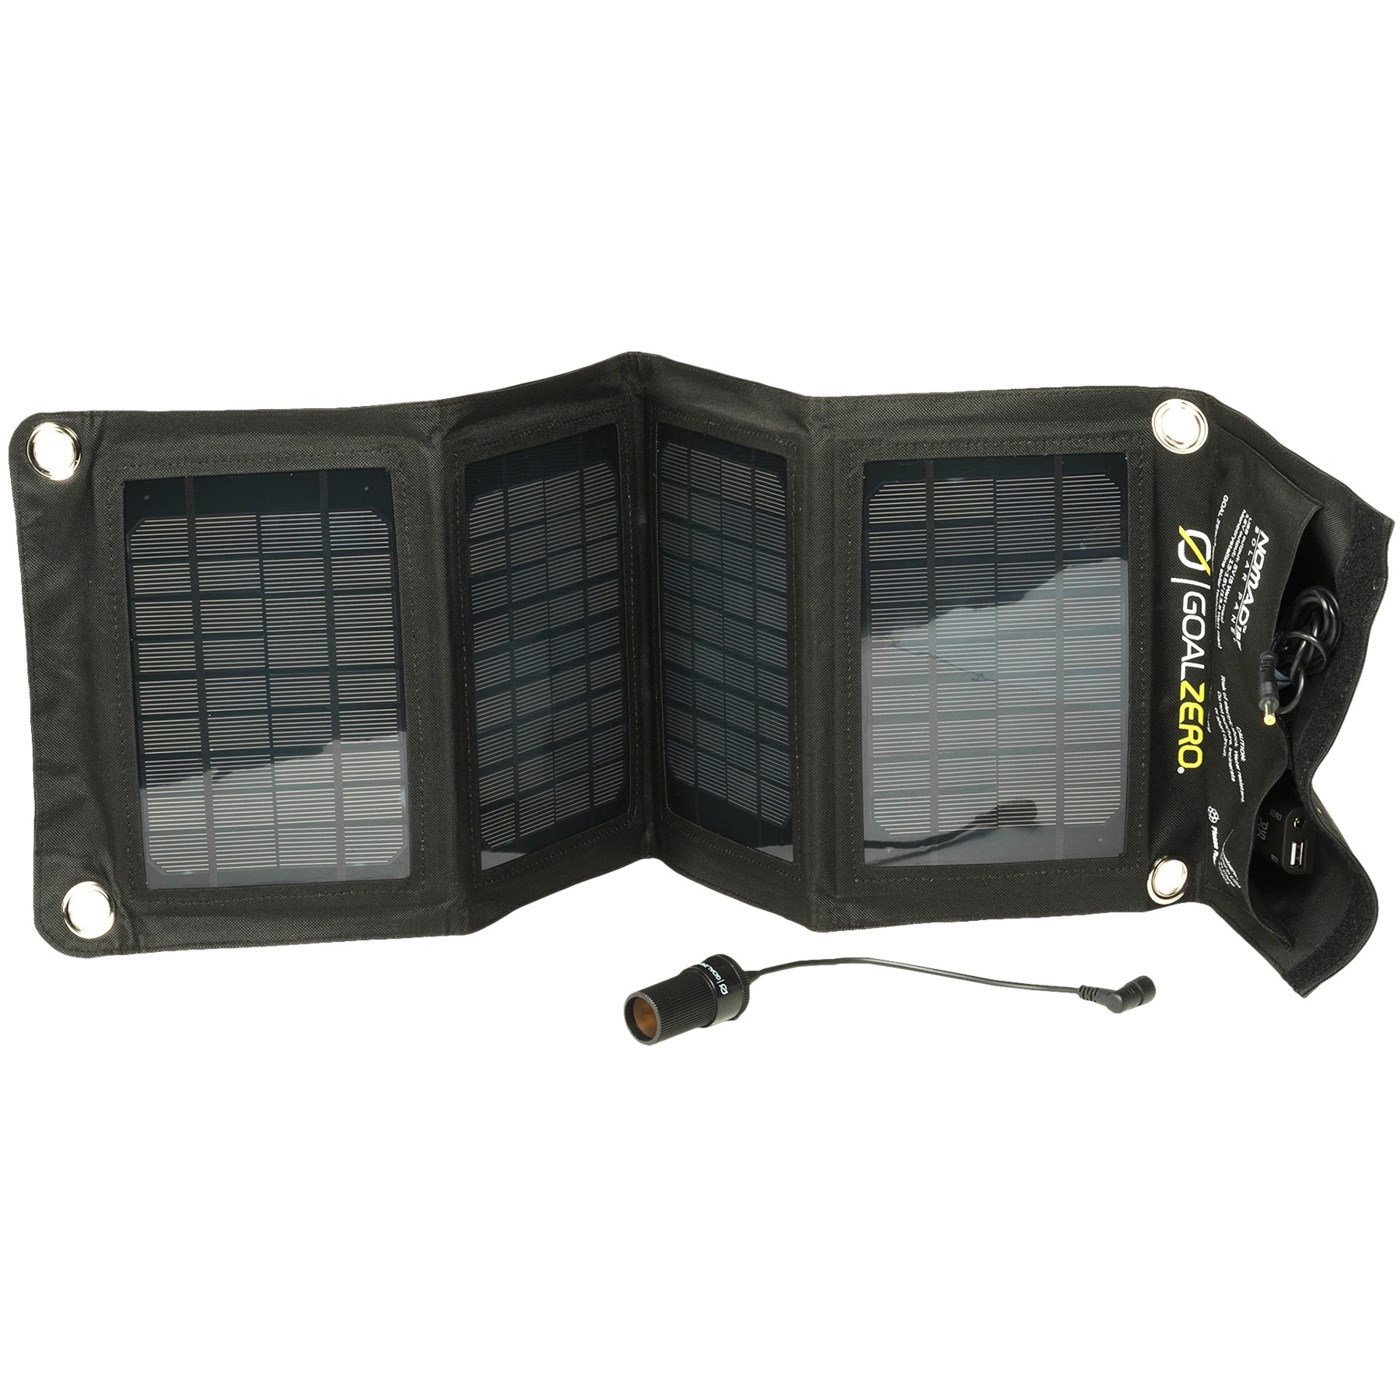 Goal Zero Nomad 13.5 Solar Panel 6454A 30